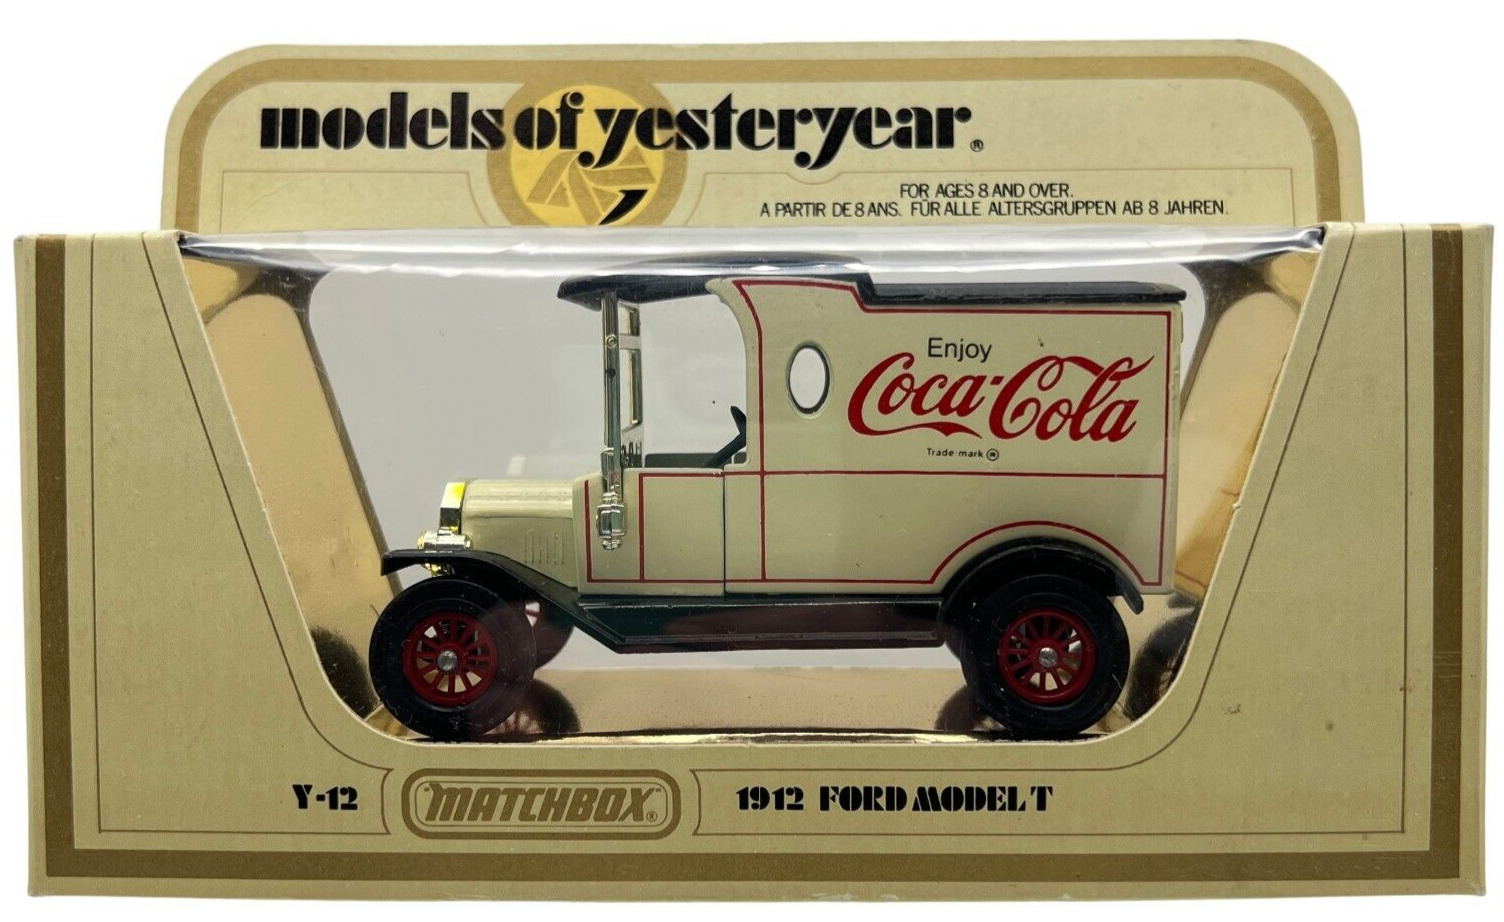 1912 Ford Model T Van Enjoy Coca Cola Y-12 Matchbox Models of Yesteryear 1/35